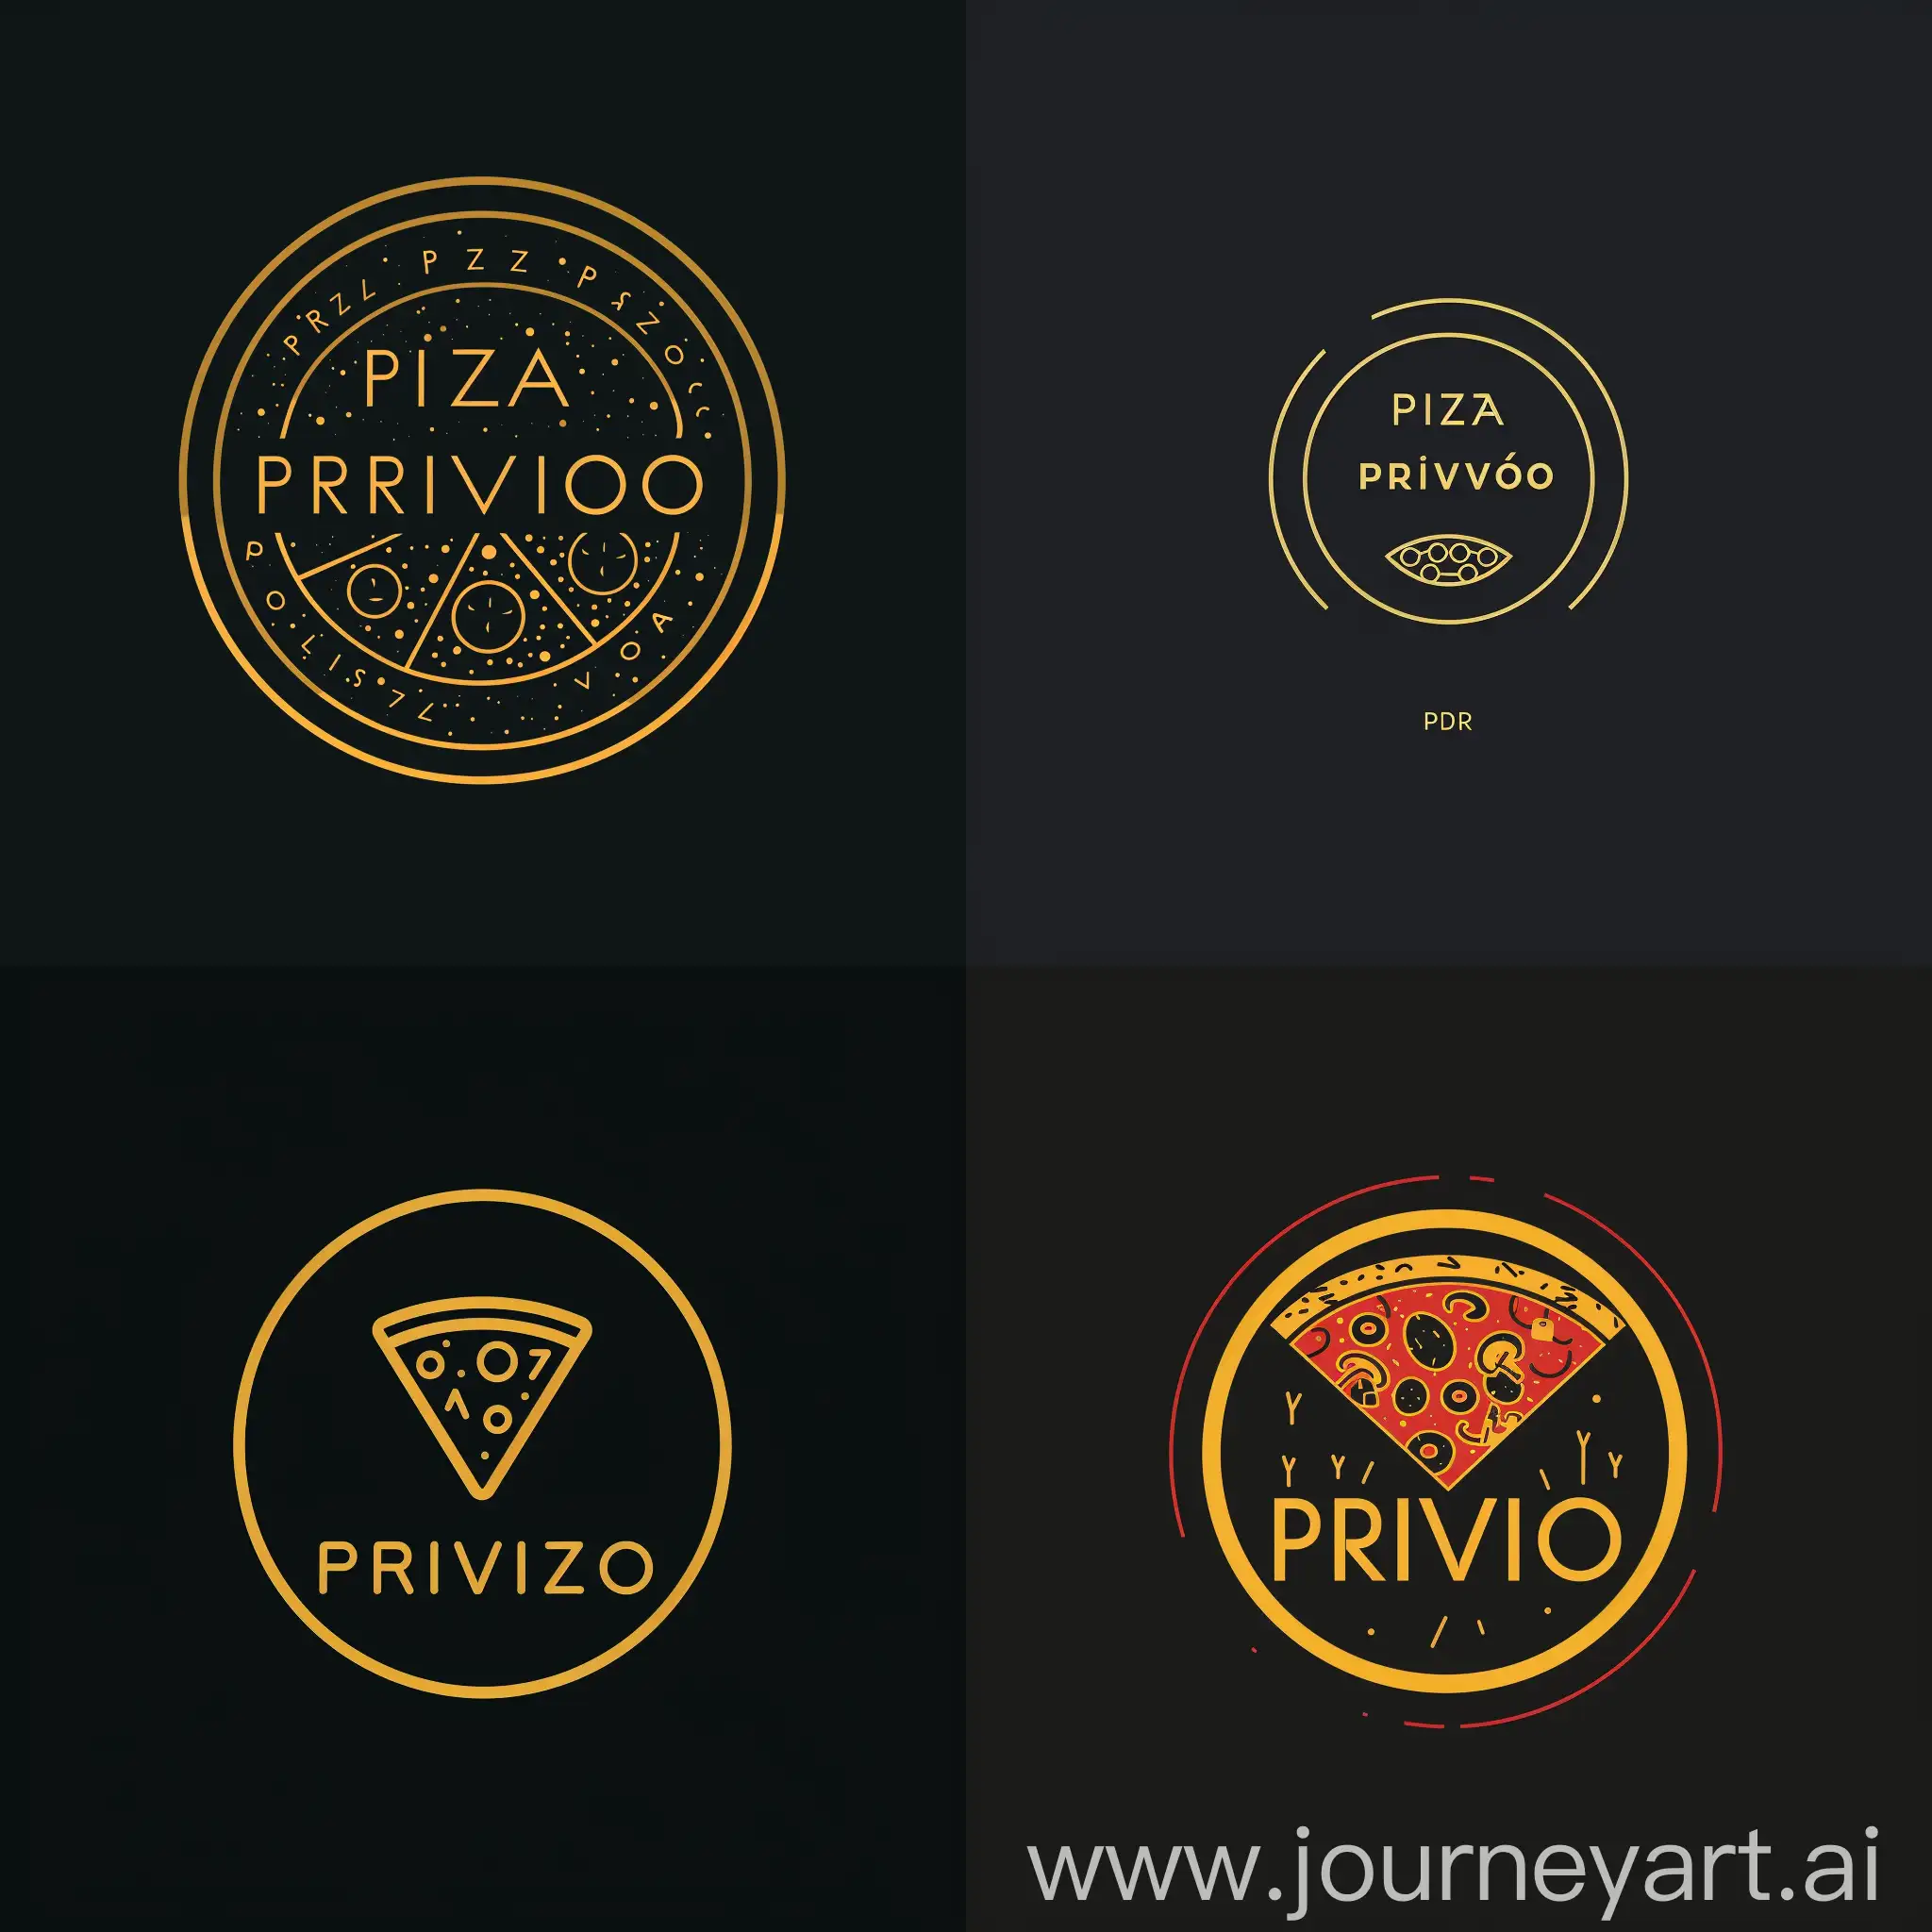 simple circular minimalistic logo
for pizza restaurant called "Pizza Privio"